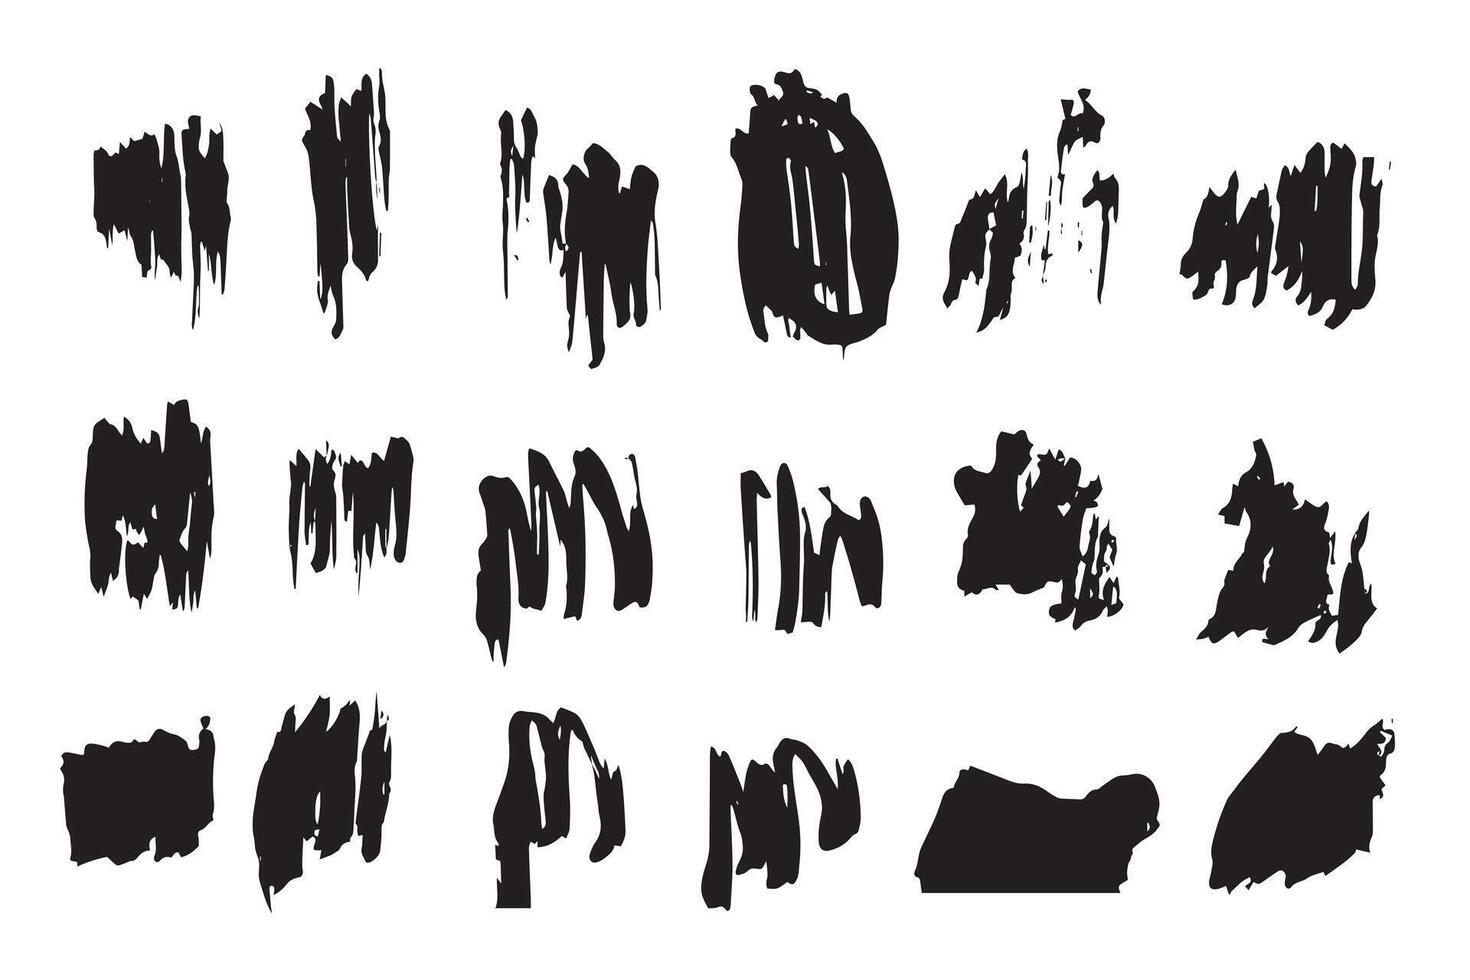 organisk svart måla rader handgjord borsta stroke samling på vit bakgrund vektor